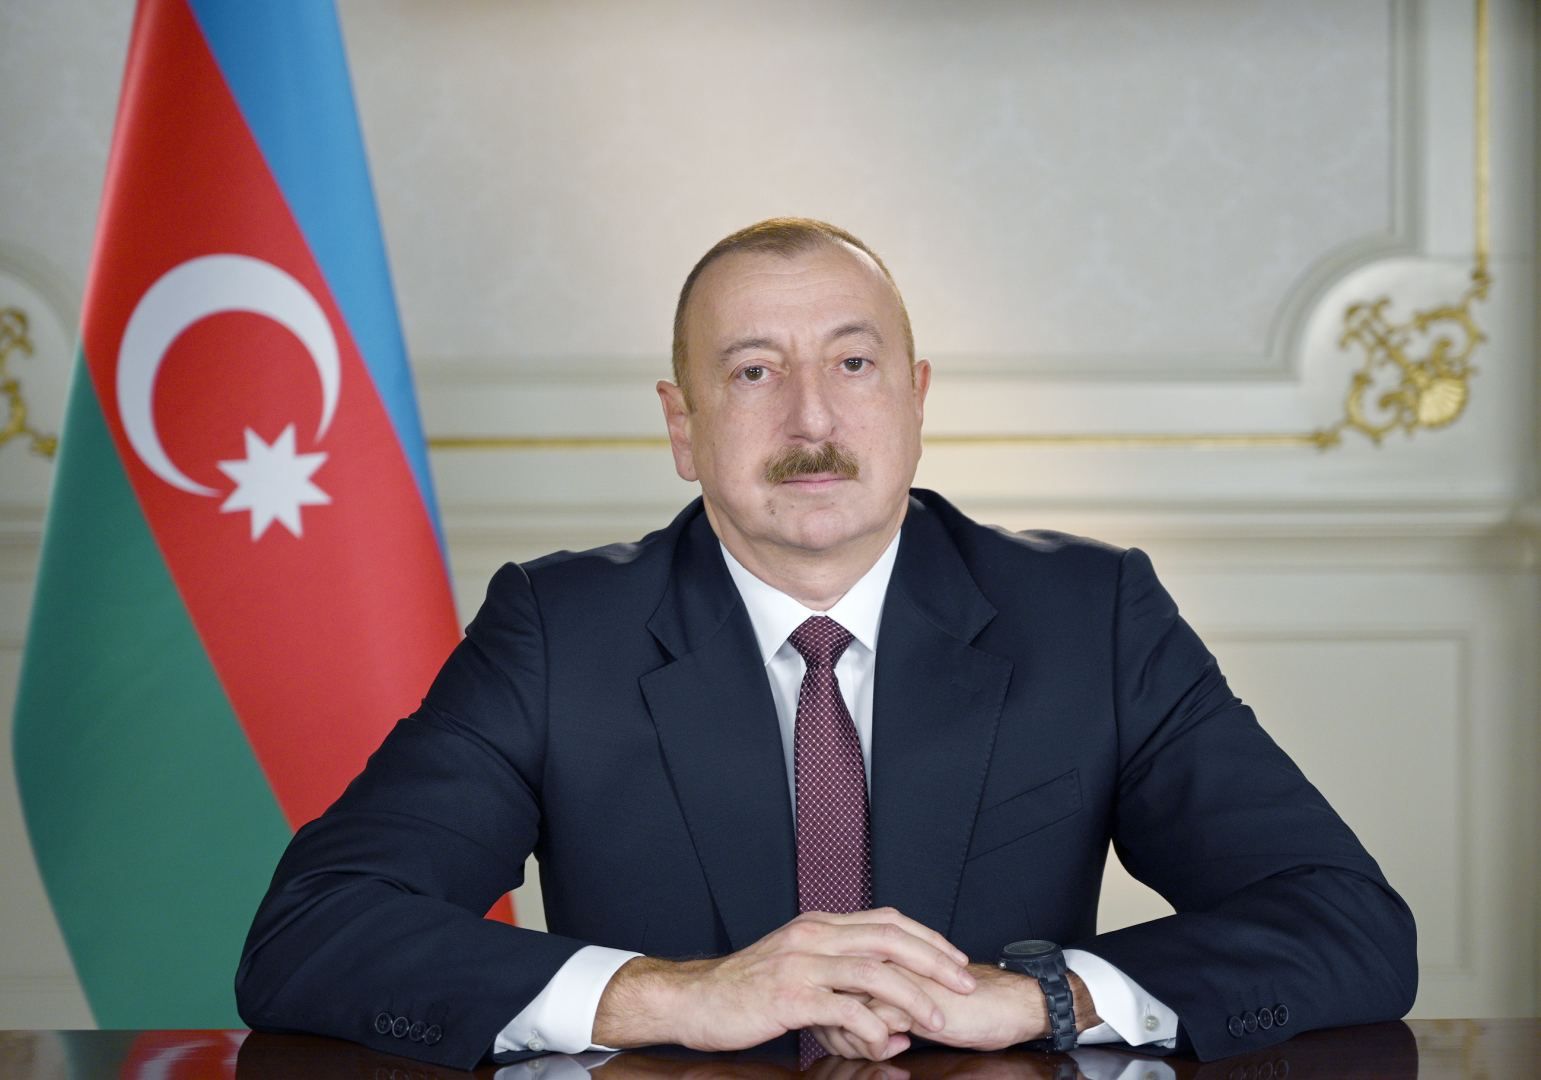 Former Moldovan PM sends letter to President Ilham Aliyev